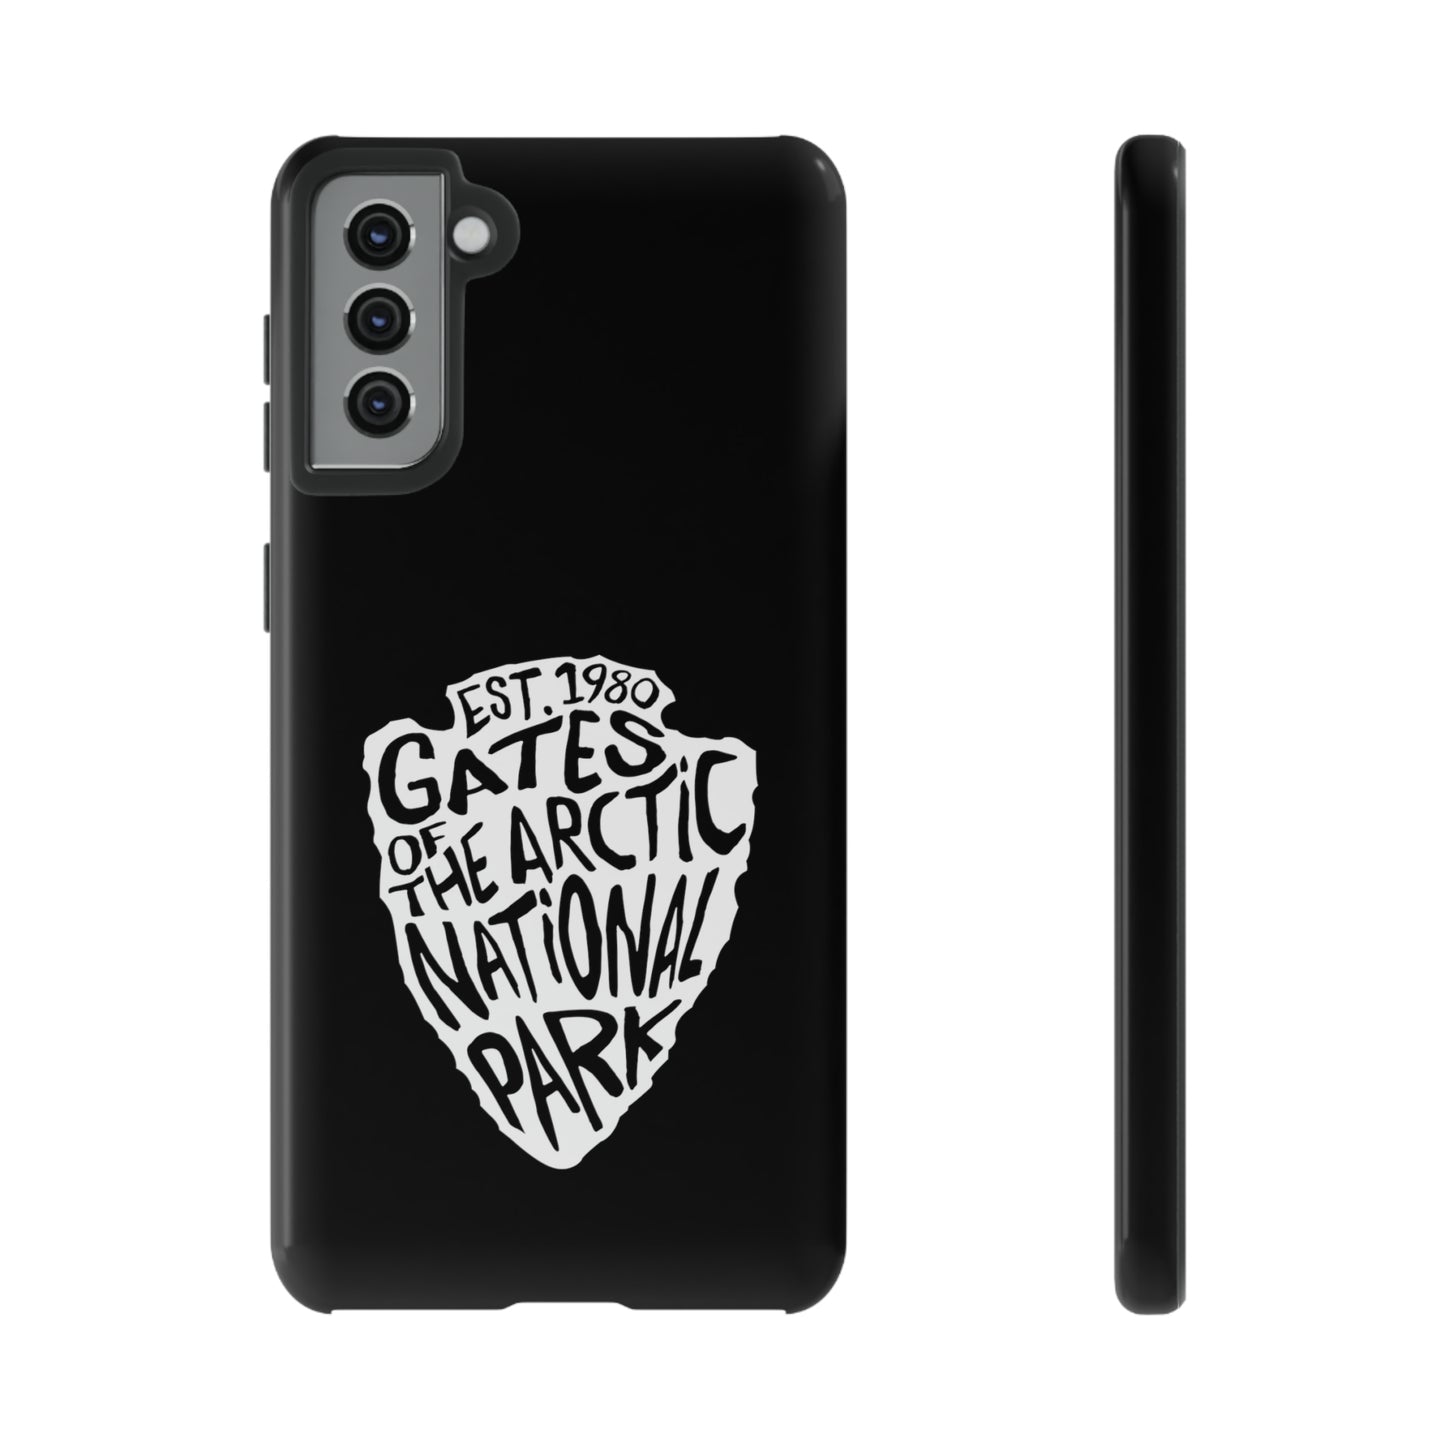 Gates of the Arctic National Park iPhone Case - Arrowhead Design